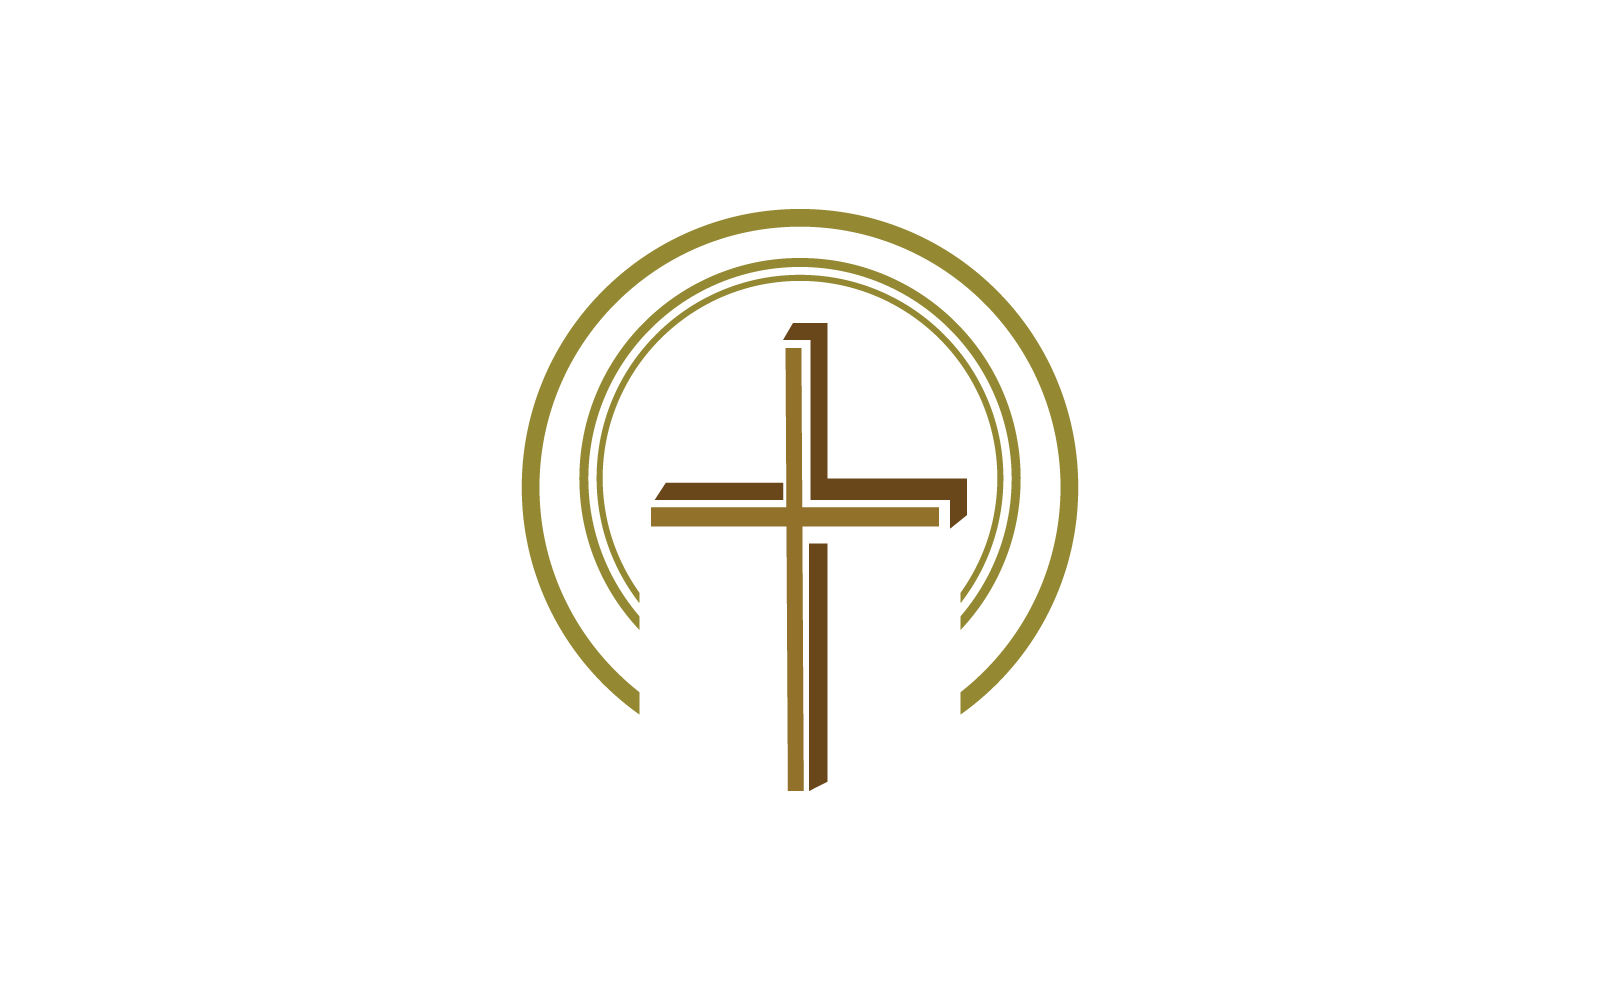 logotipo da igreja ilustração vetorial design plano